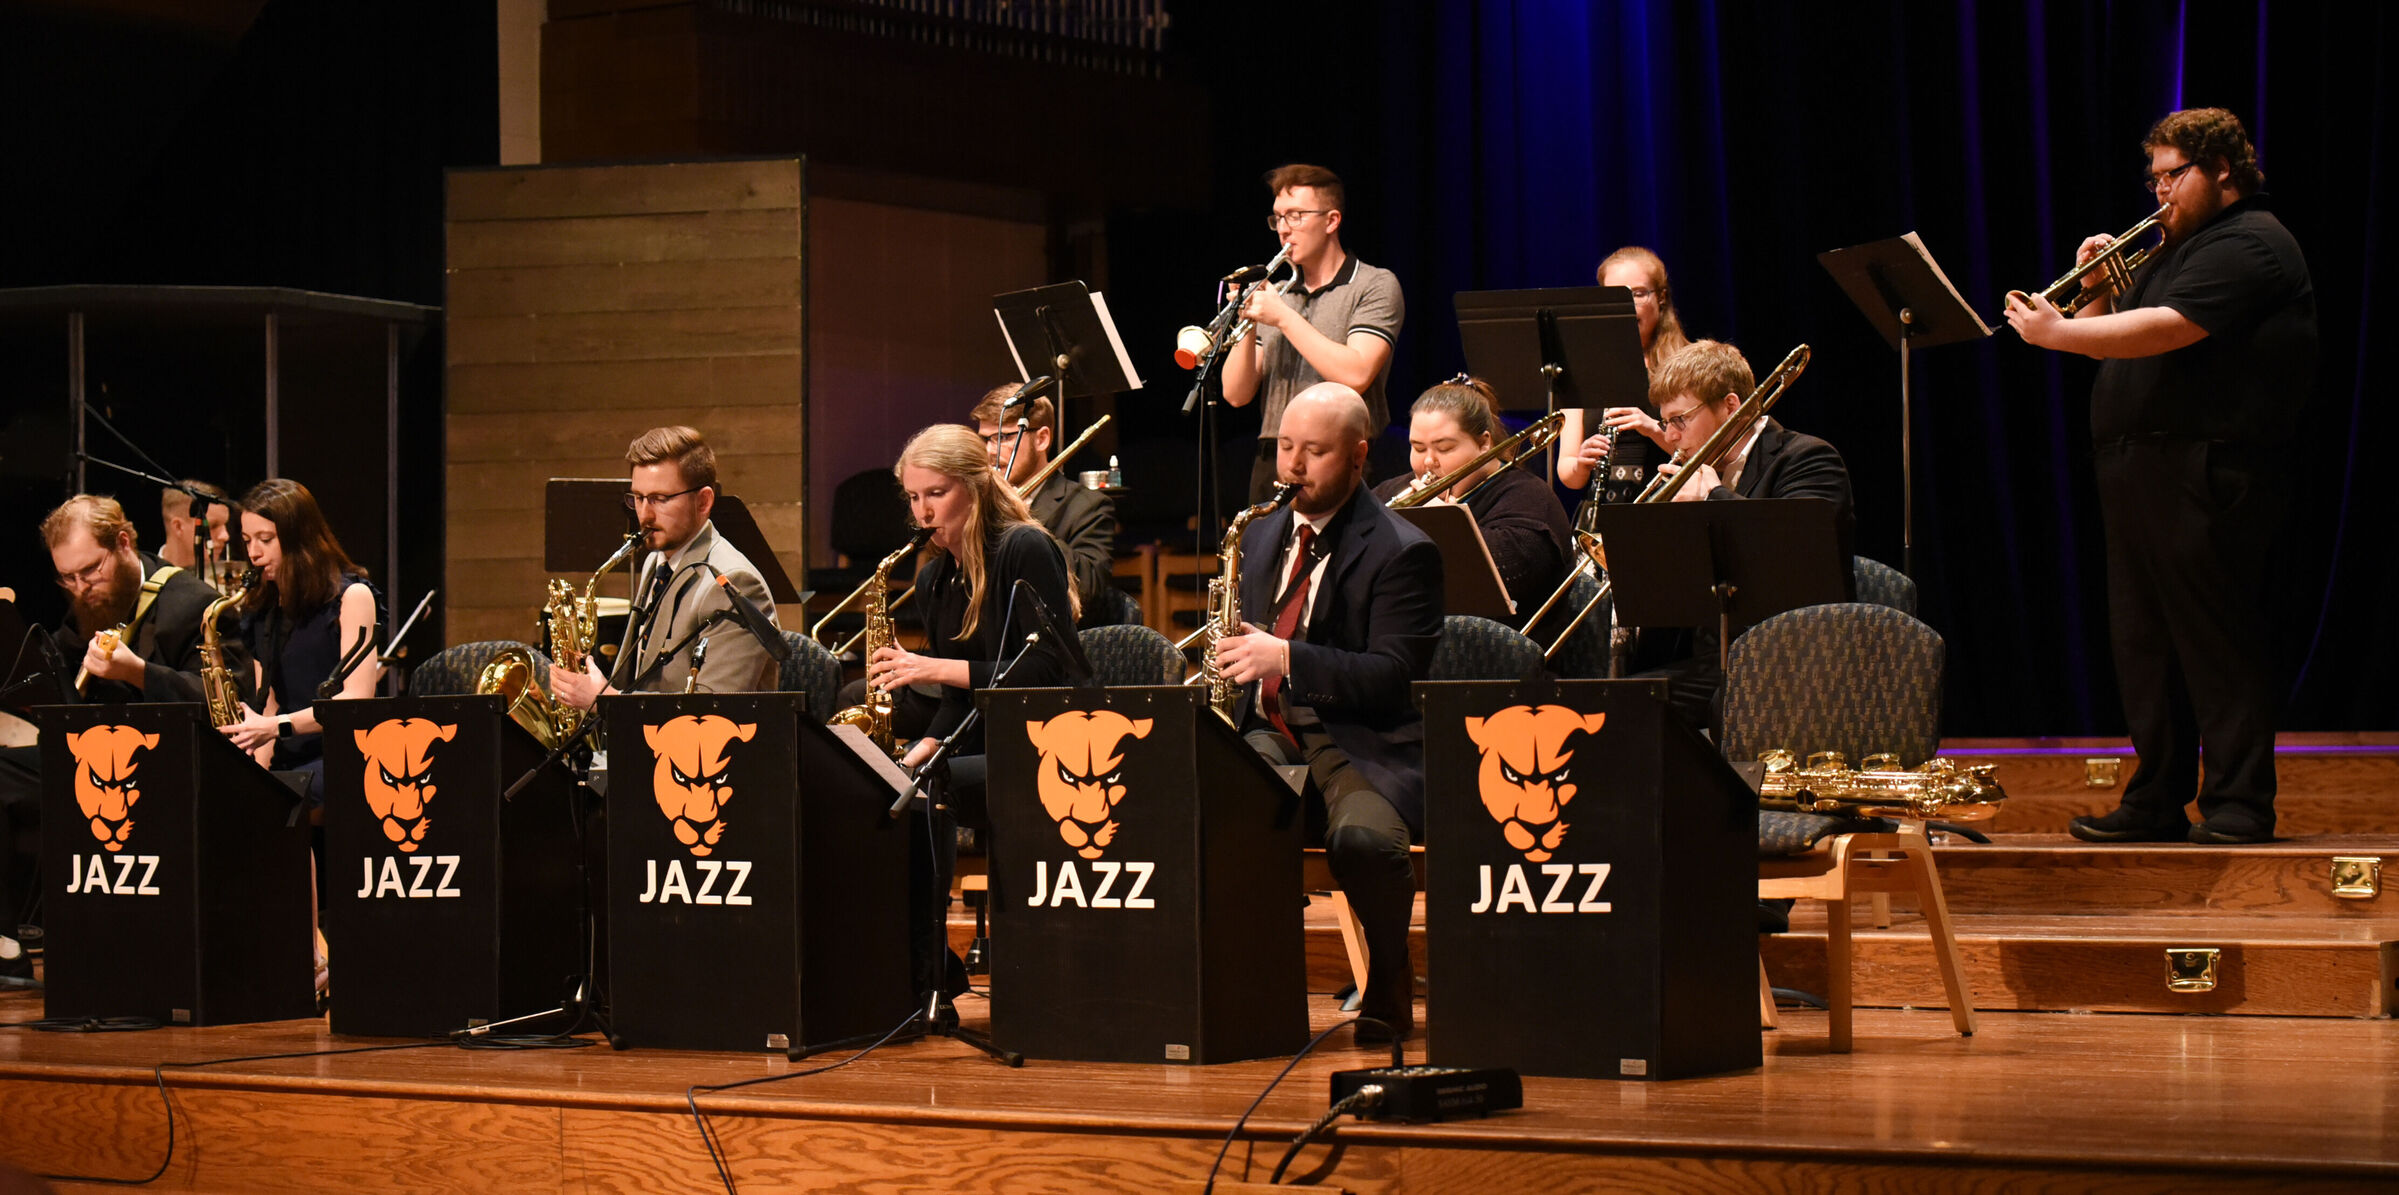 Wide-ranging program presented by GU Jazz Band